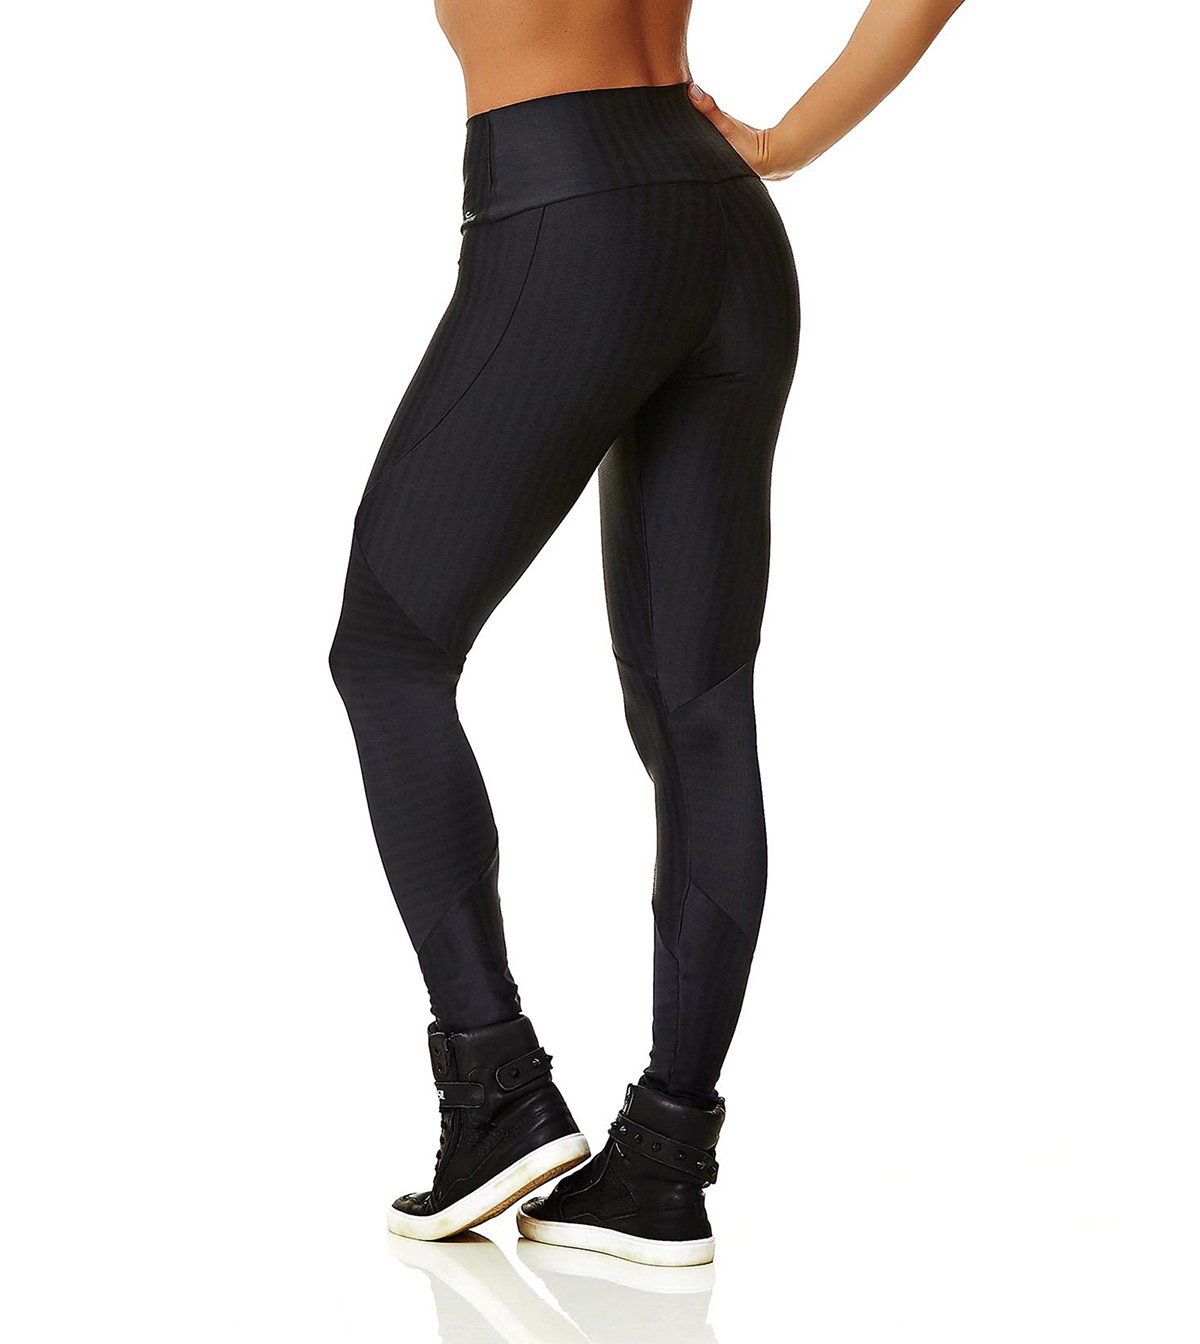 Black Textured Workout Leggings With Zipper Legging Ziper Black